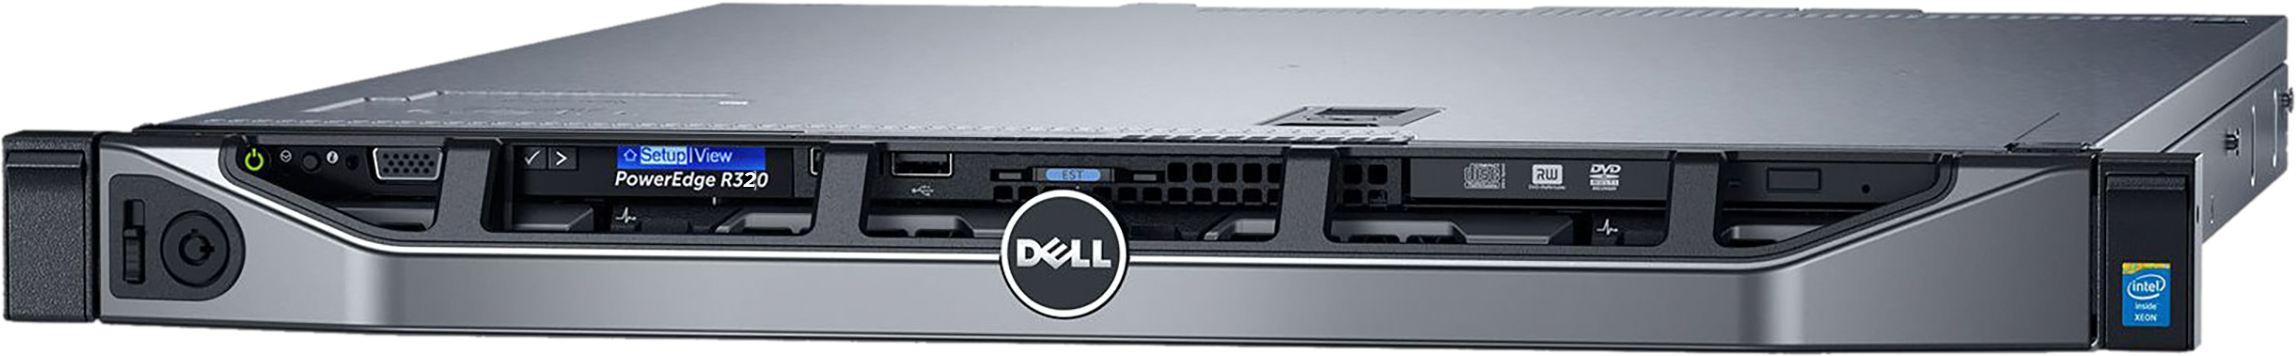 Аренда физического сервера DELL R320 / E5-2450 v2 / 32 GB RAM / 4 × 8 TB HDD / H310